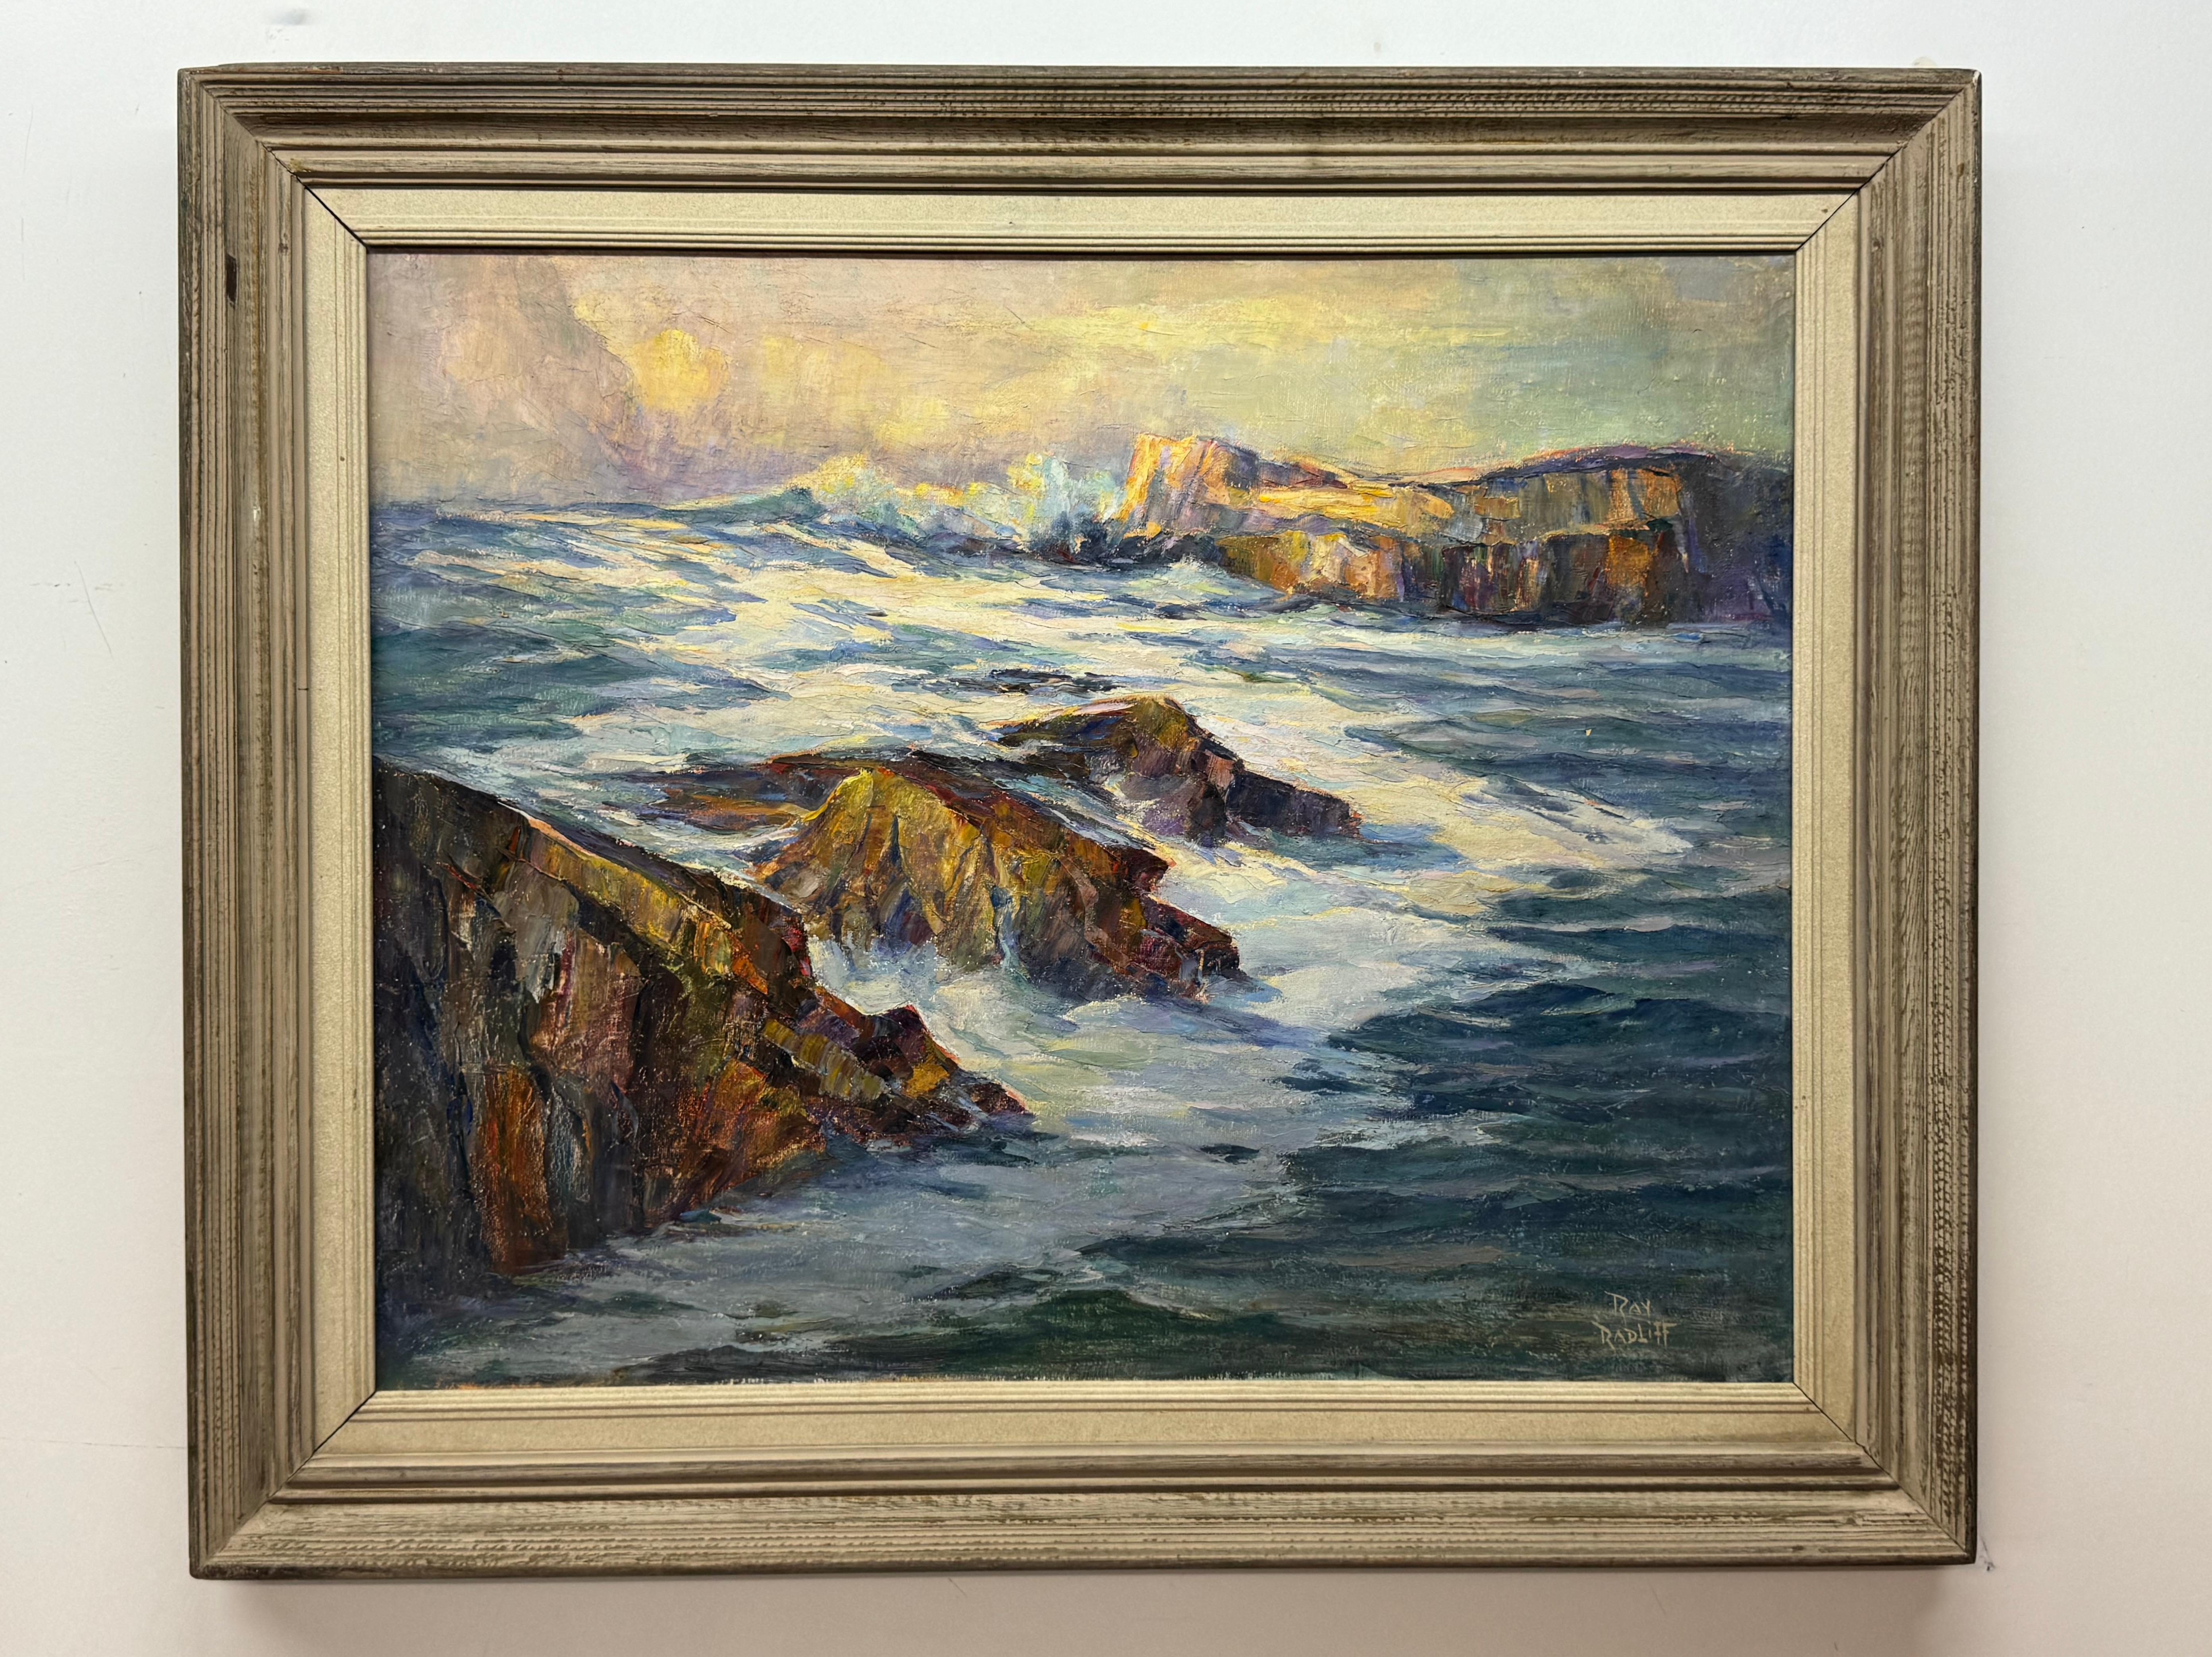 Ray Radliff "Sunset Surf" Coastal Landscape Painting

Oil on canvas 

24 x 30 unframed, 30.75 x 36.5 framed
